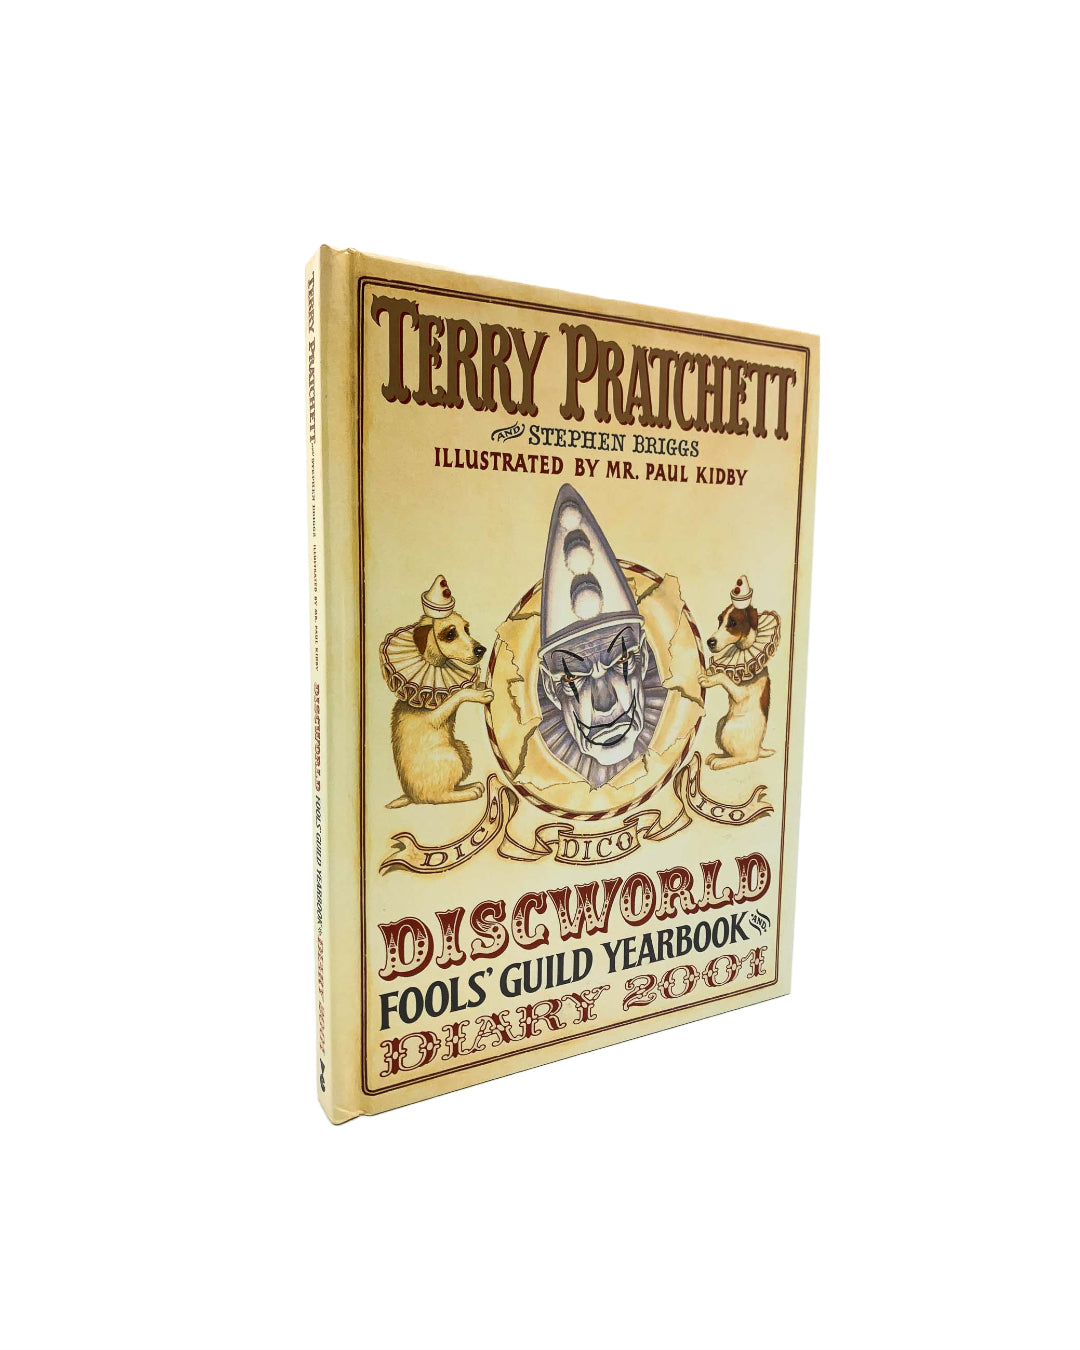 Pratchett, Terry - Discworld Fools' Guild Yearbook & Diary 2001